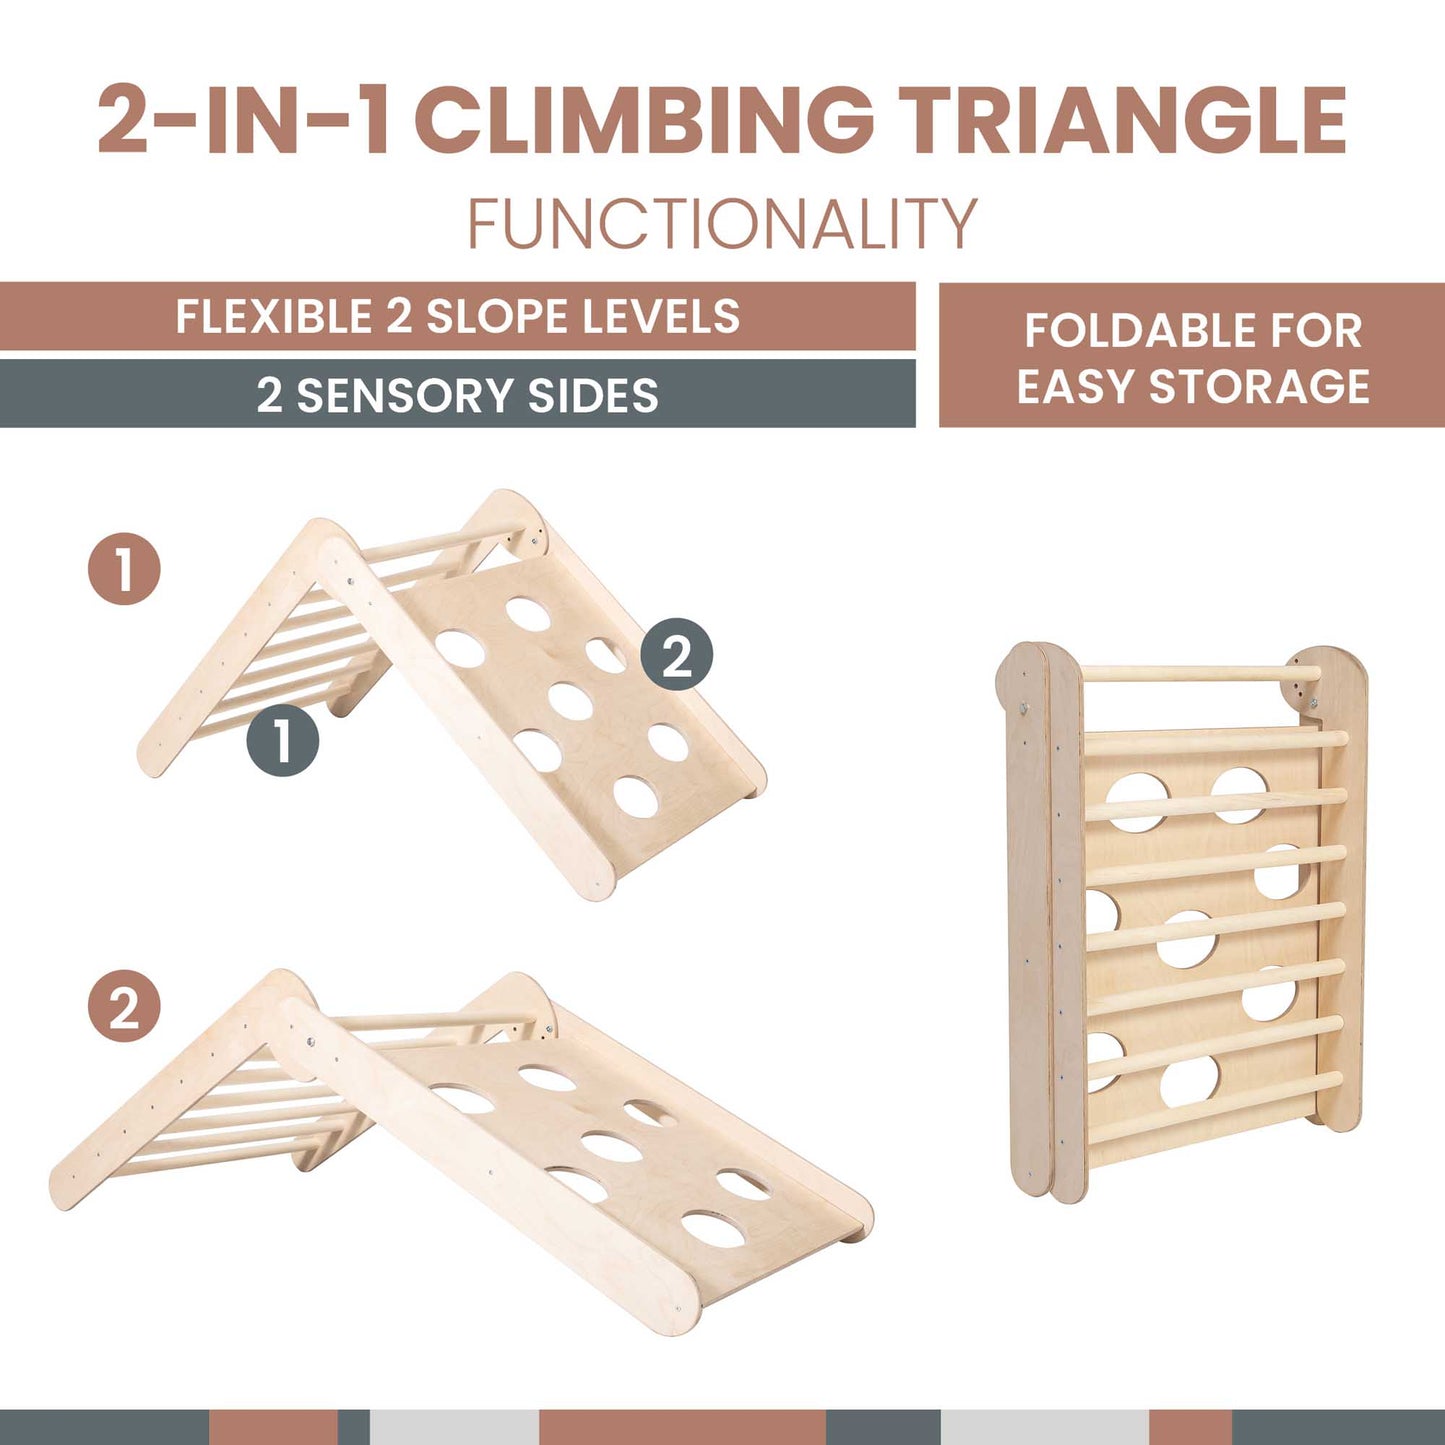 Climbing arch + Transformable climbing triangle + a ramp